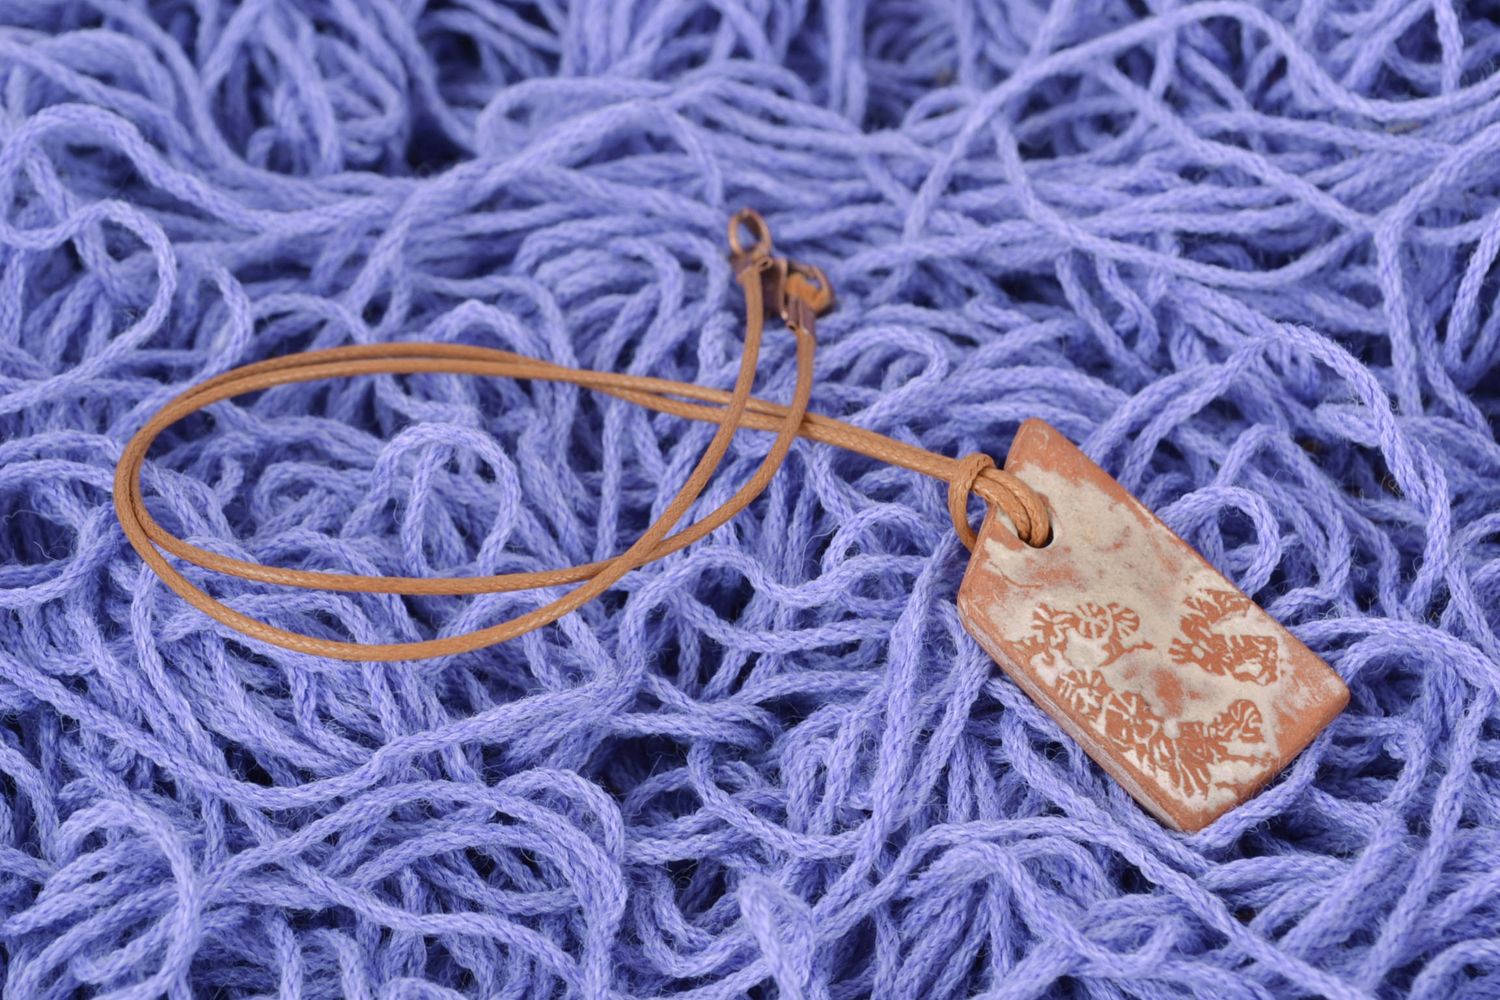 Handmade ceramic pendant with cord photo 1